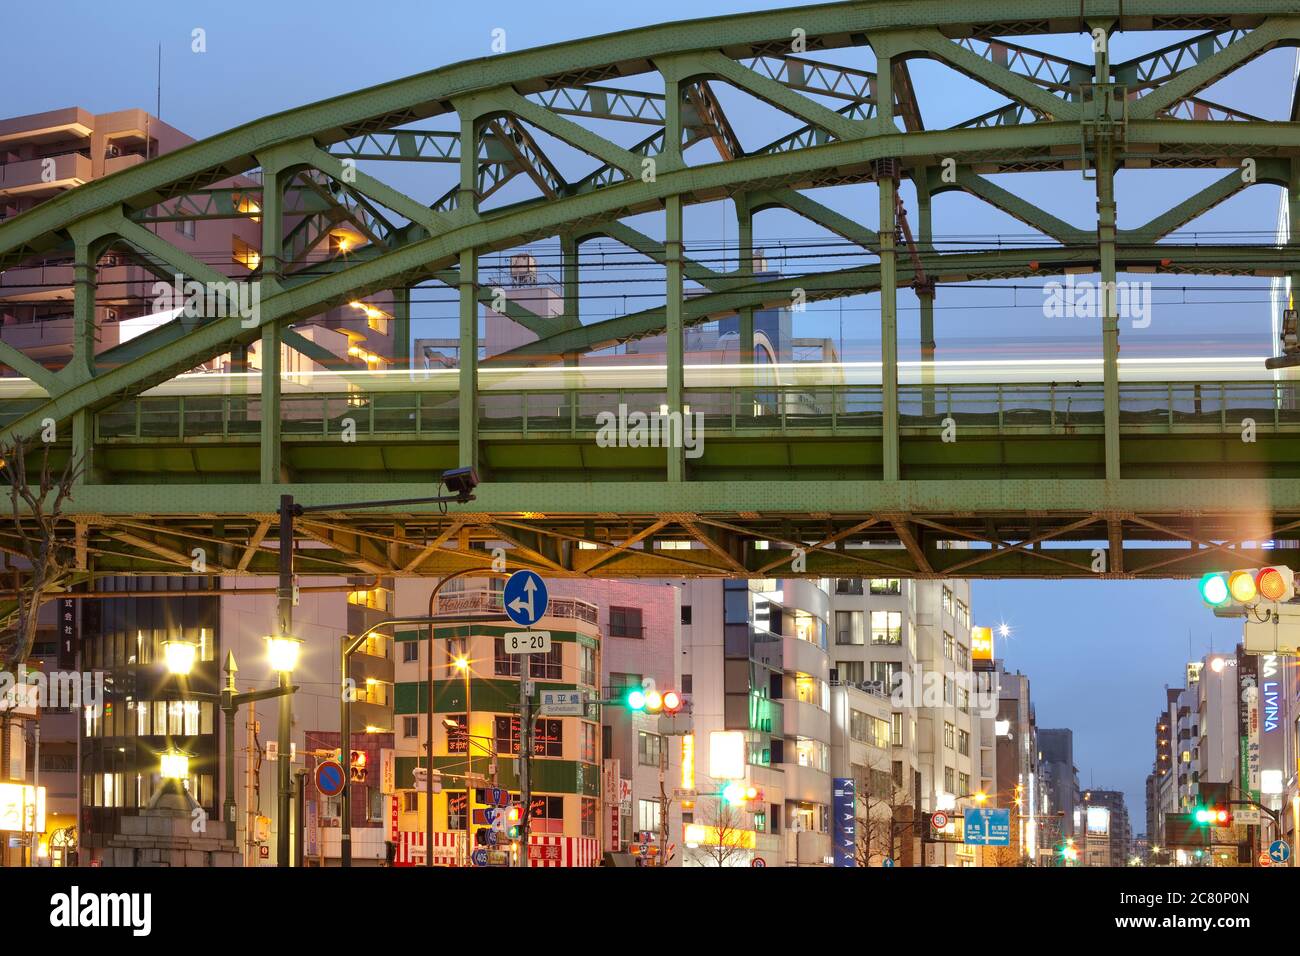 Akihabara Electric Town, Tokyo, Kanto Region, Honshu, Japan - Train on elevated bridge and Illuminated buildings. Stock Photo